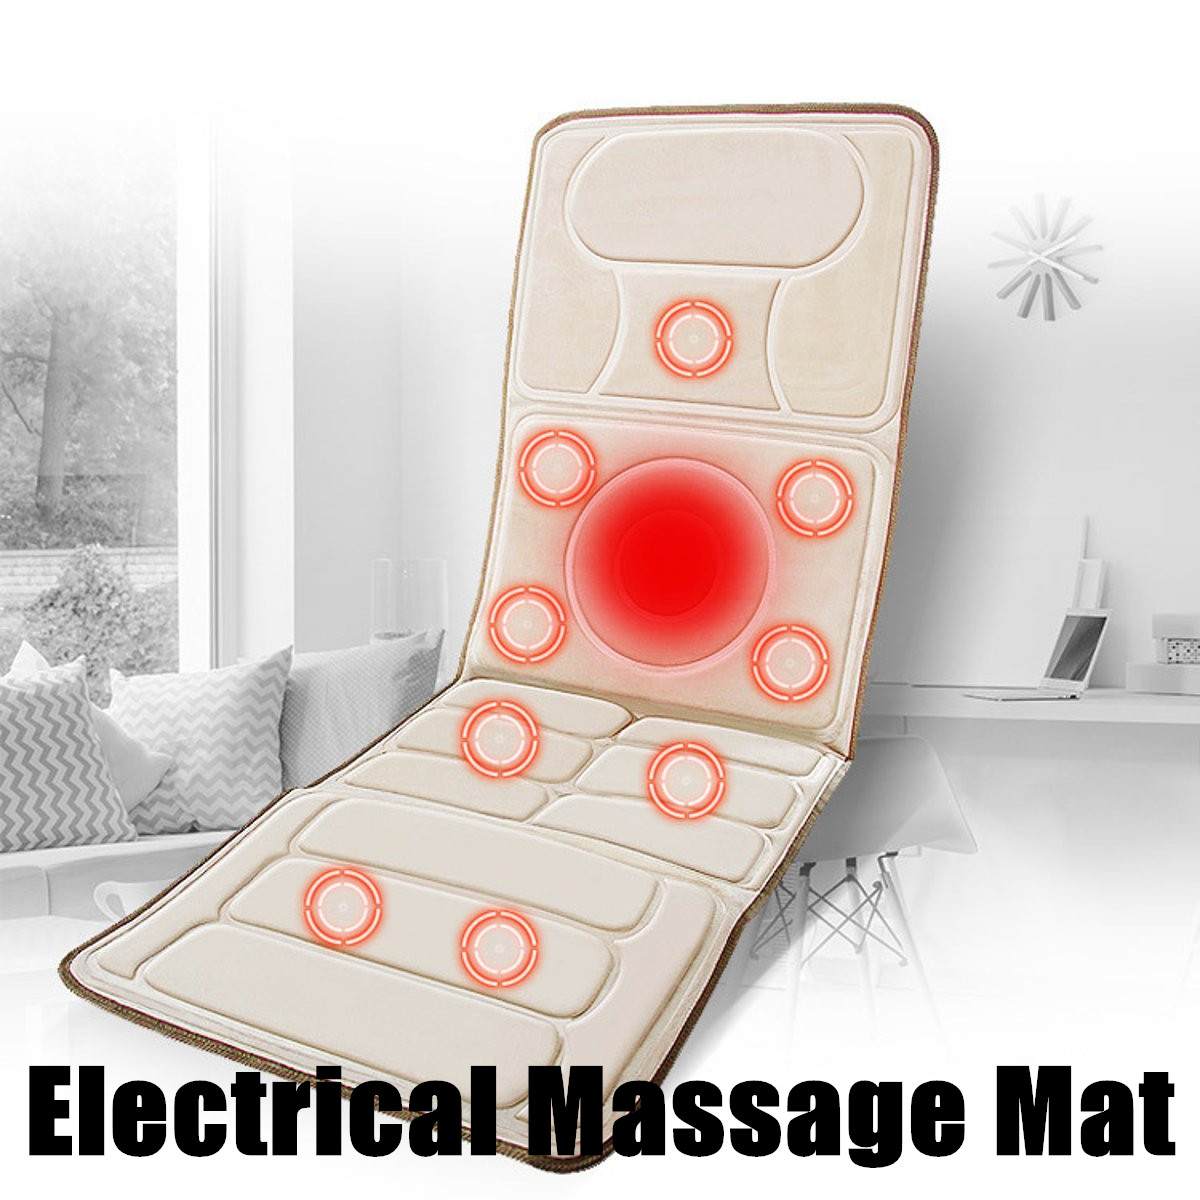 Infrared-Heating-Full-Body-Massage-Cushion-Heated-Therapy-Back-Massage-Chair-Cushion-Full-Body-Renmo-1938389-2